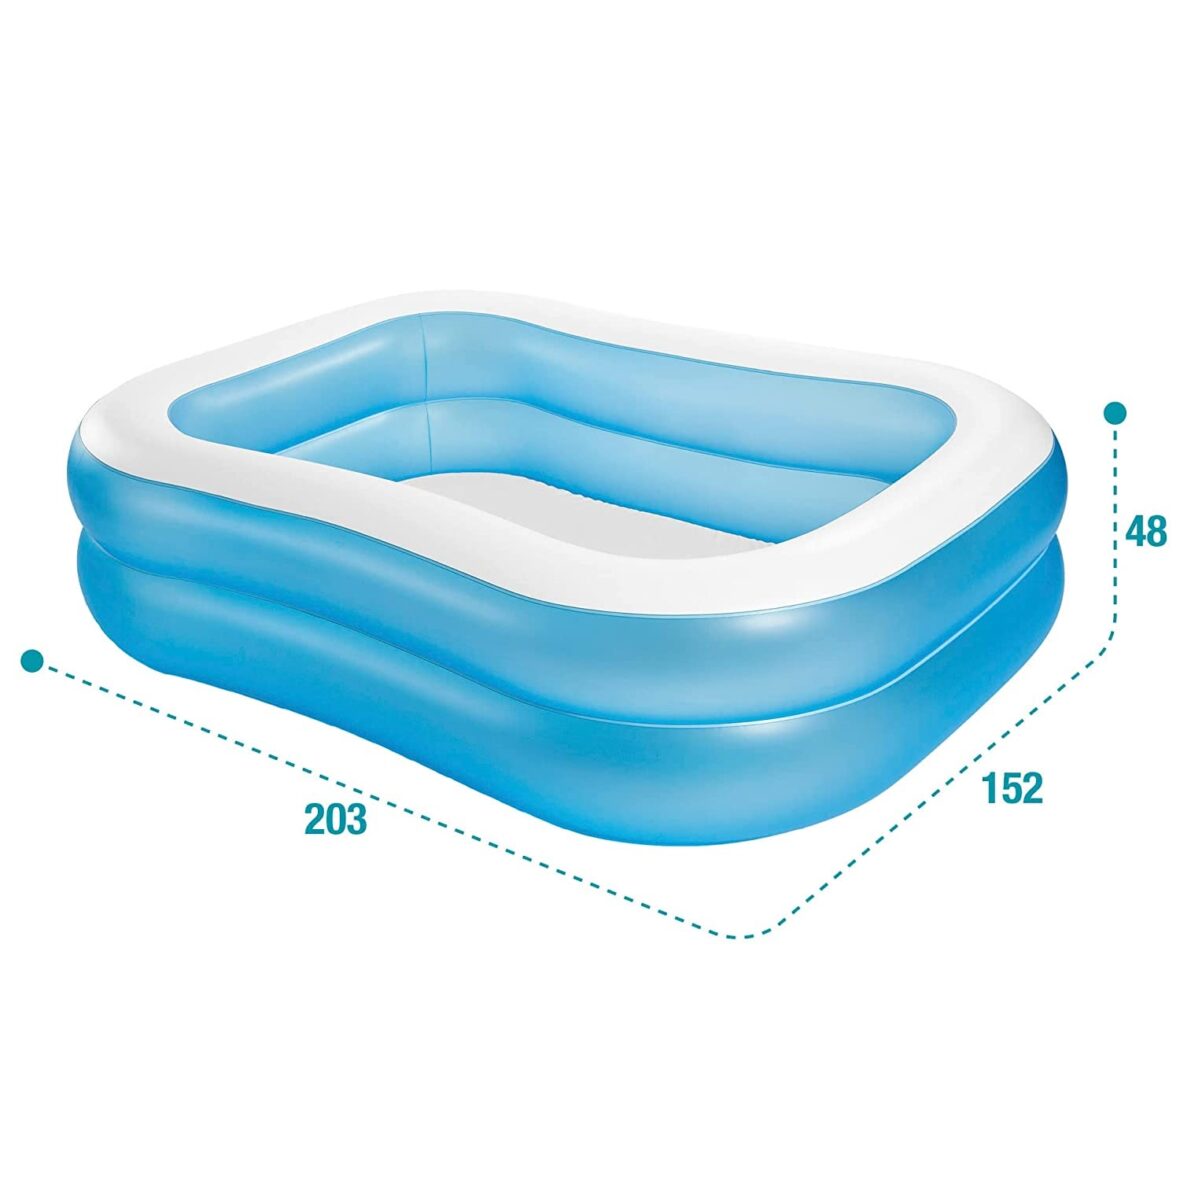 Intex Swim Center Family Swimming Pool White Blue – 57180.1